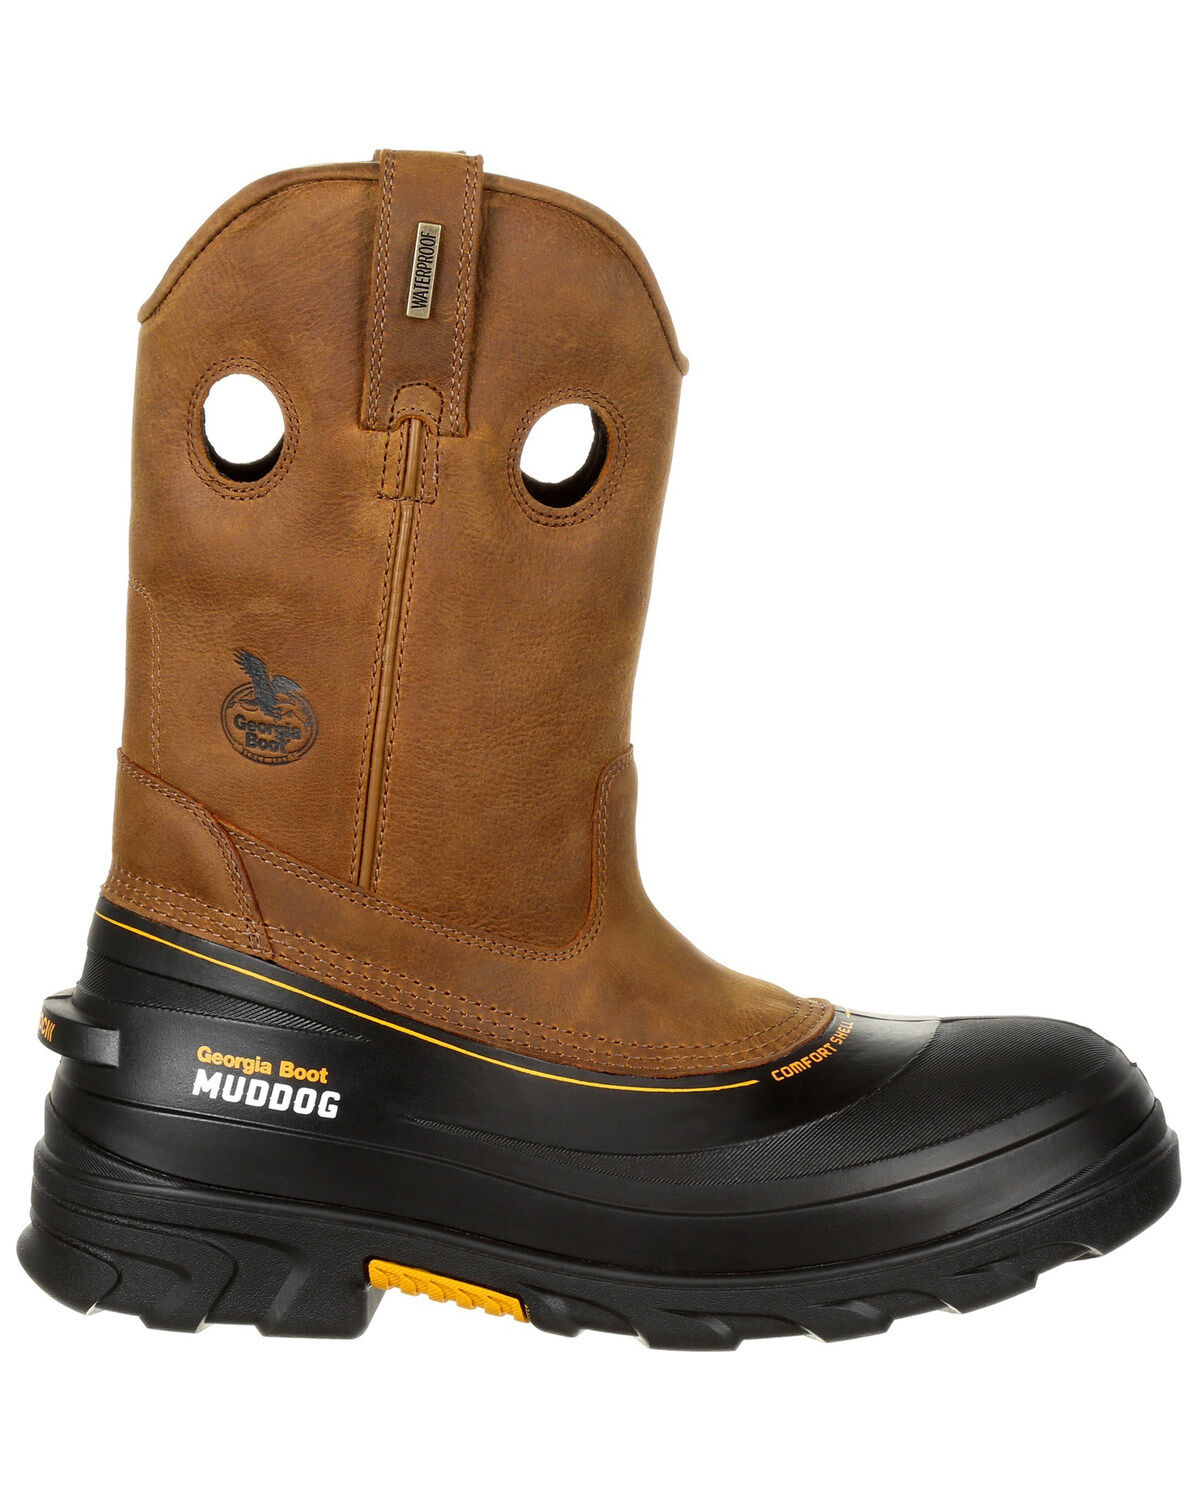 Georgia Boot Men's Muddog Waterproof 